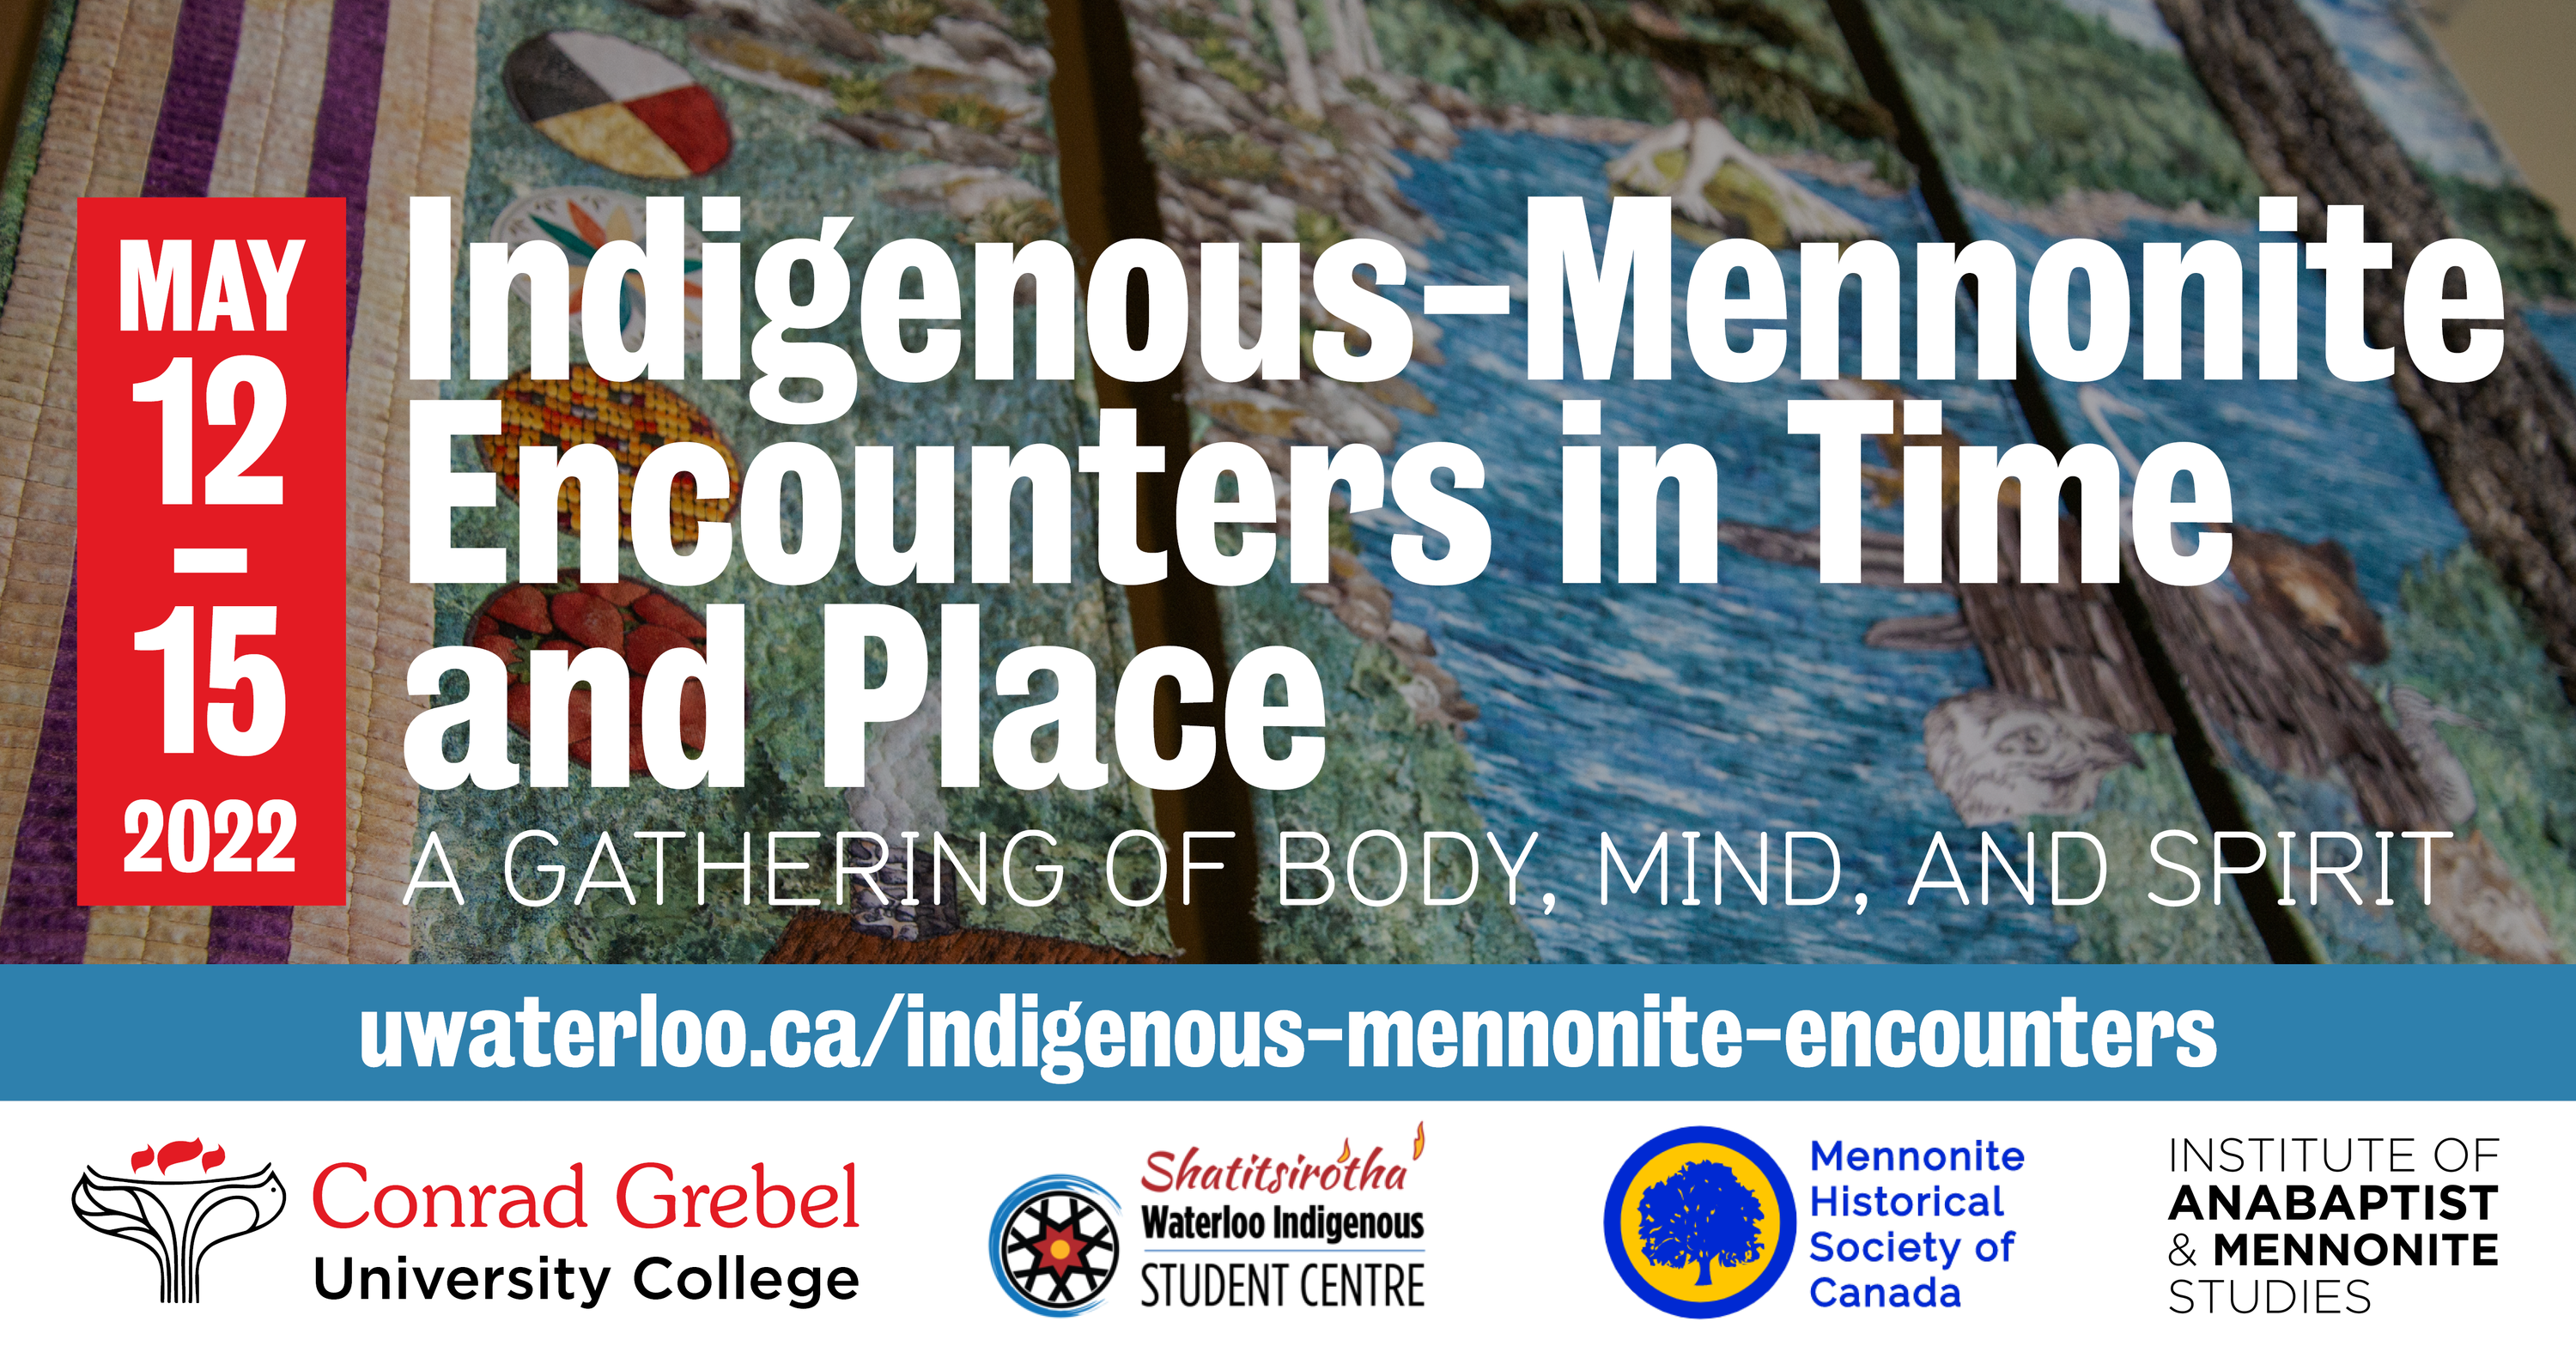 Indigenous-Mennonite Encounters